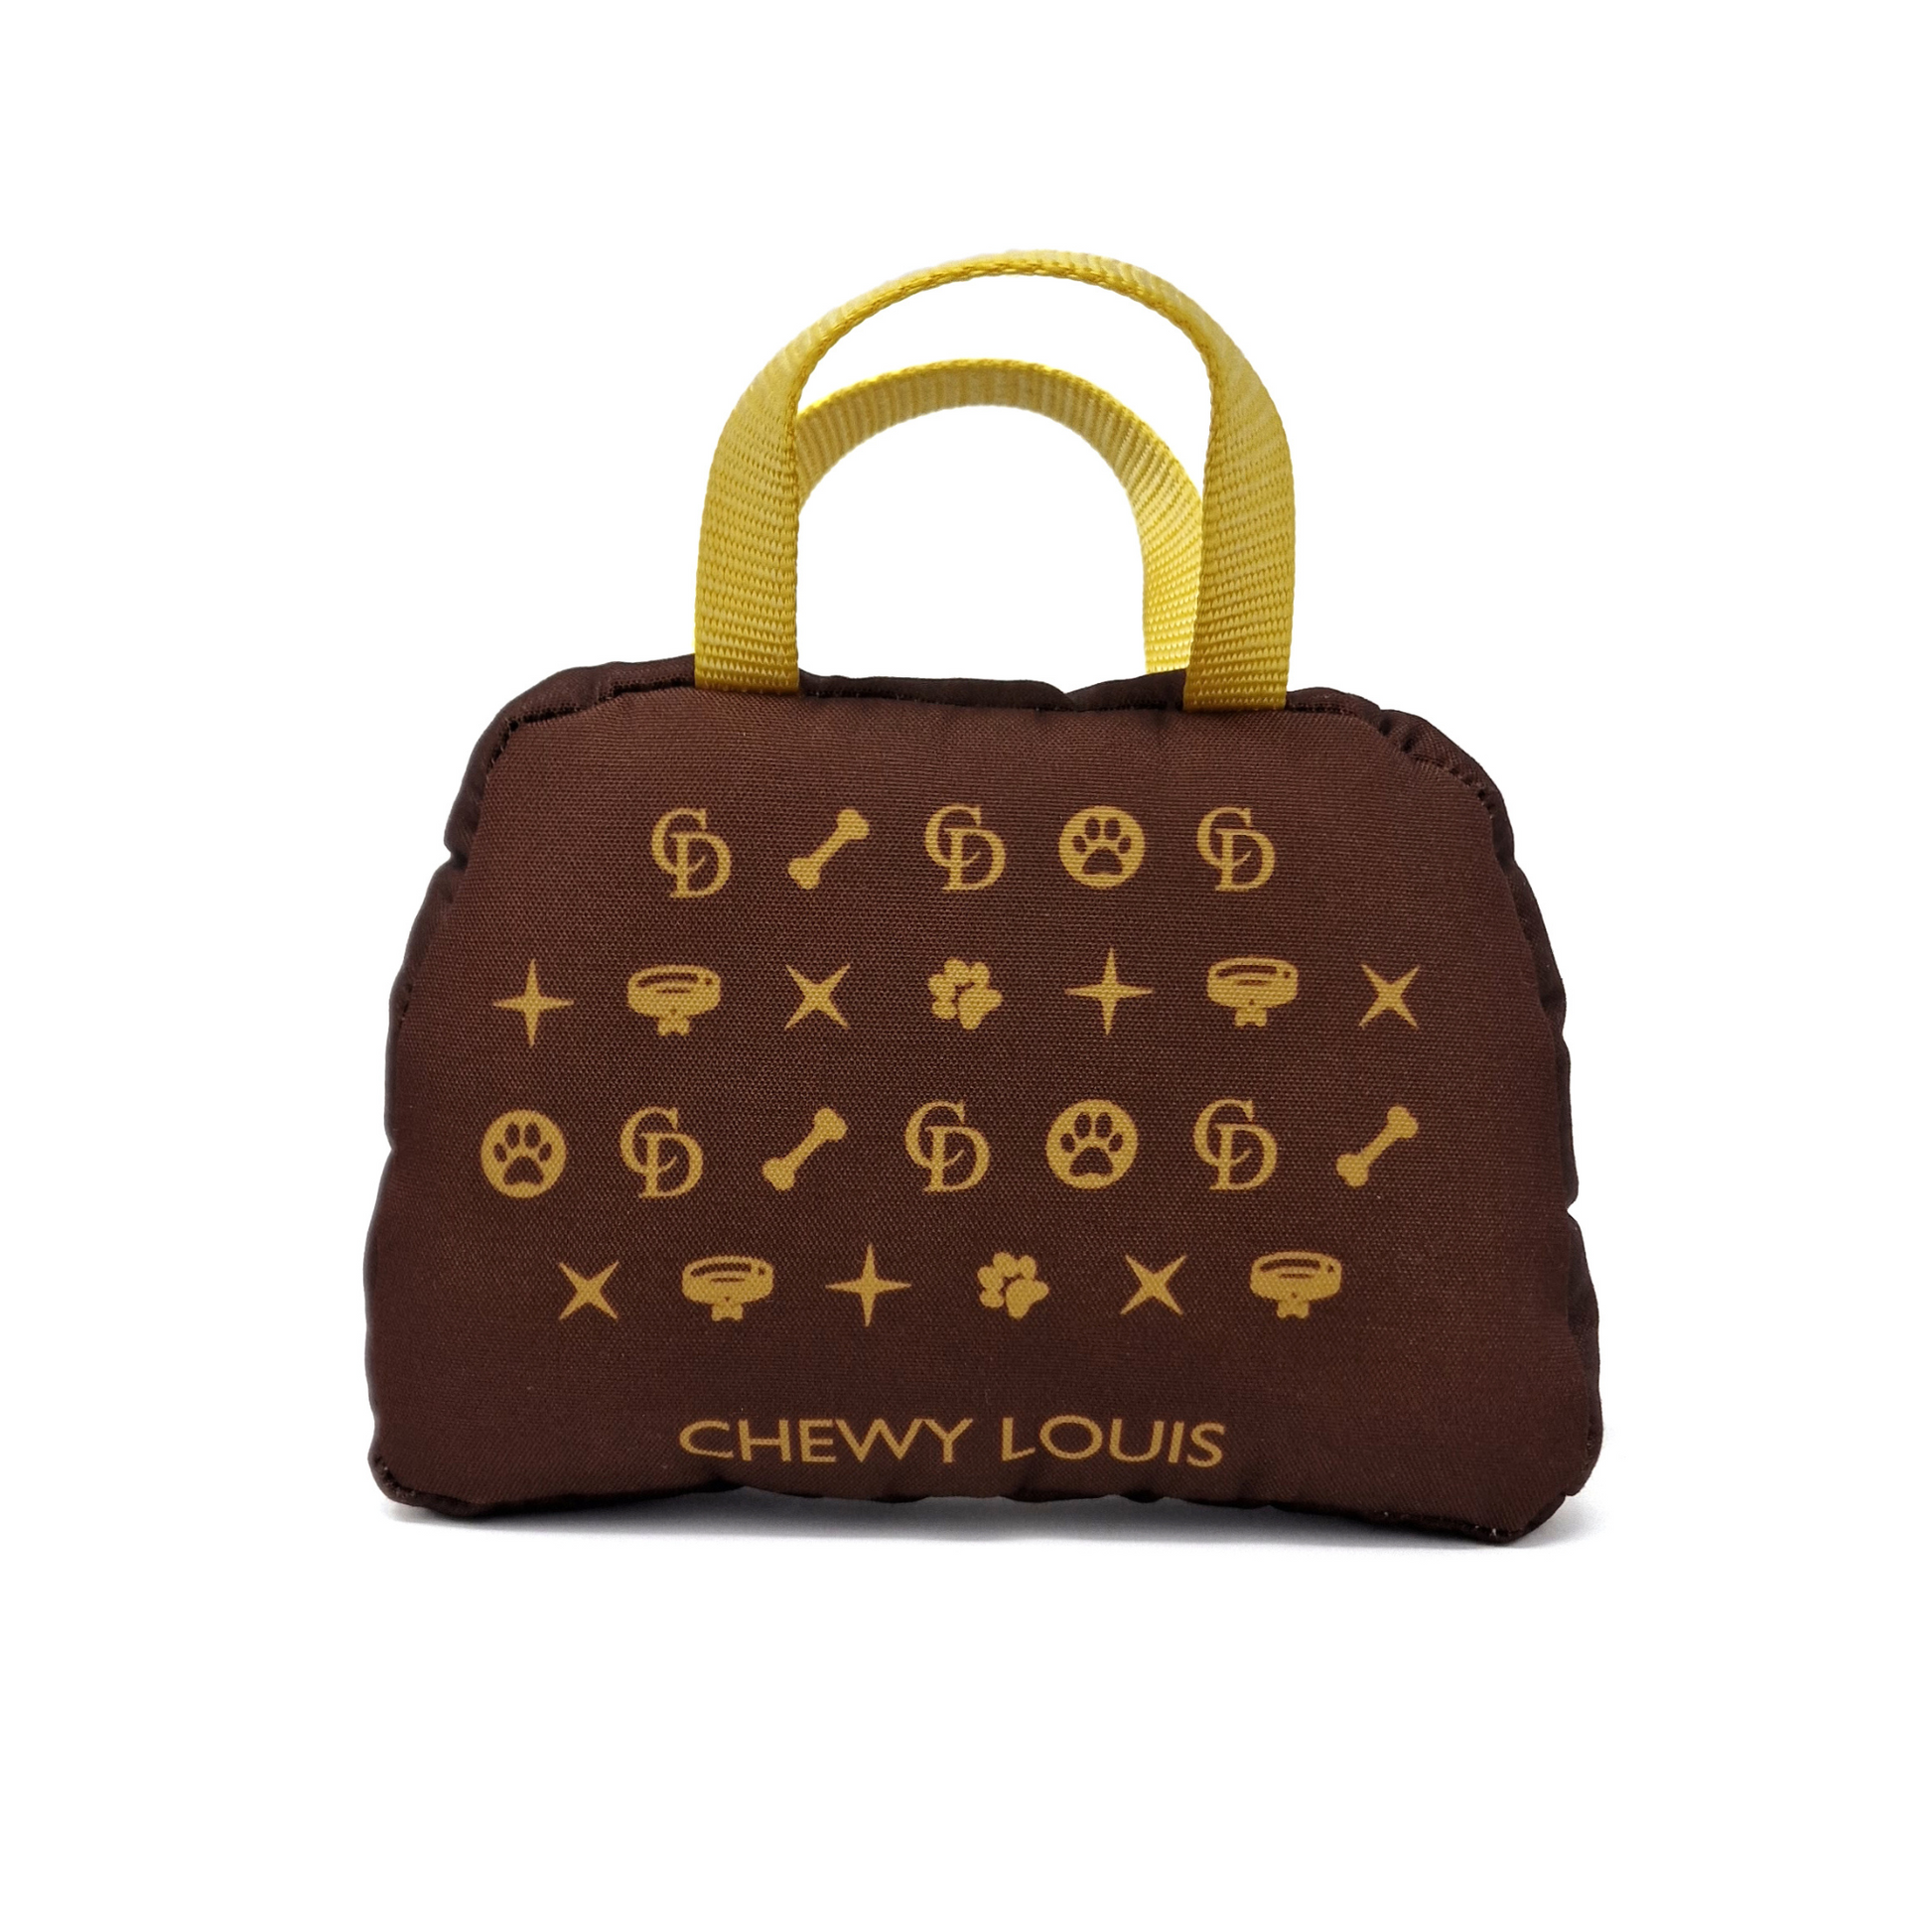 Brown Chewy Vuiton Dog Toy Handbag, Dog Toys